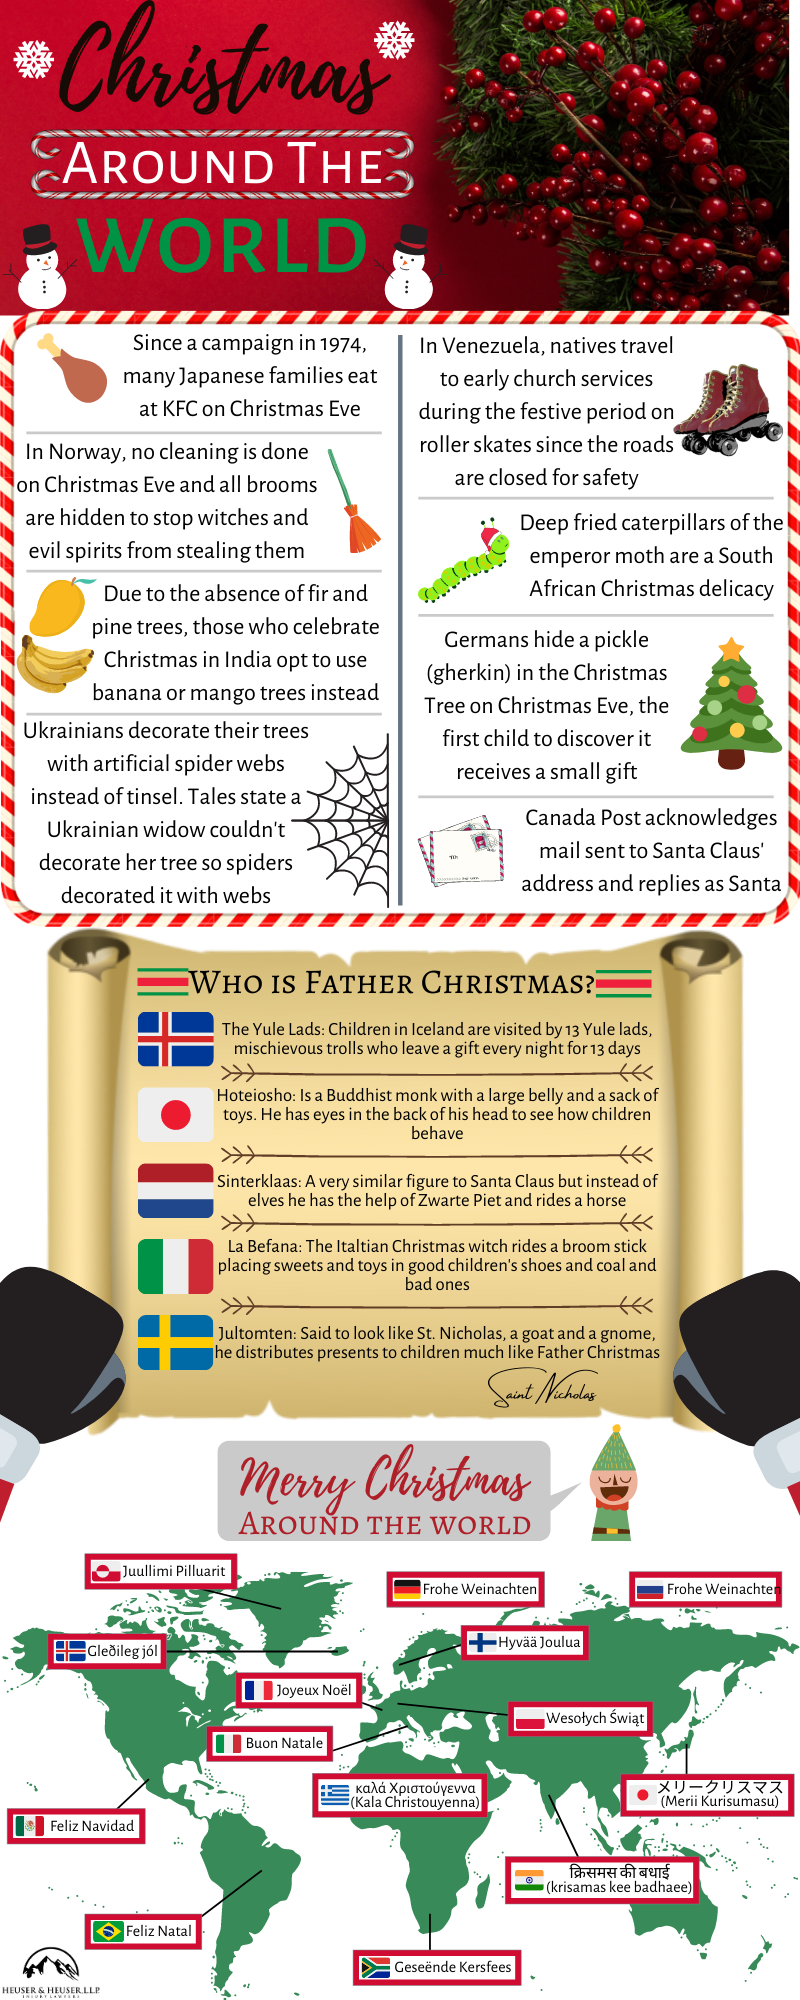 Christmas Around the World infographic